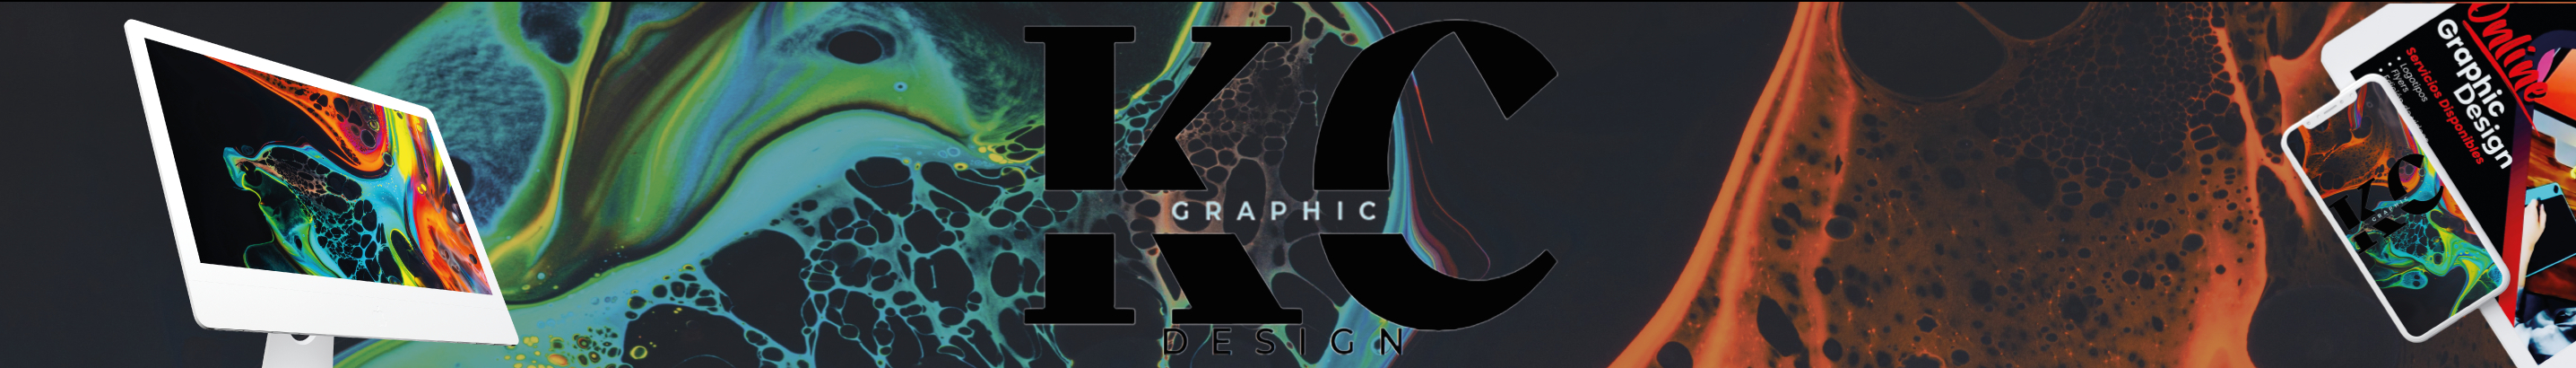 KC Graphic Design のプロファイルバナー